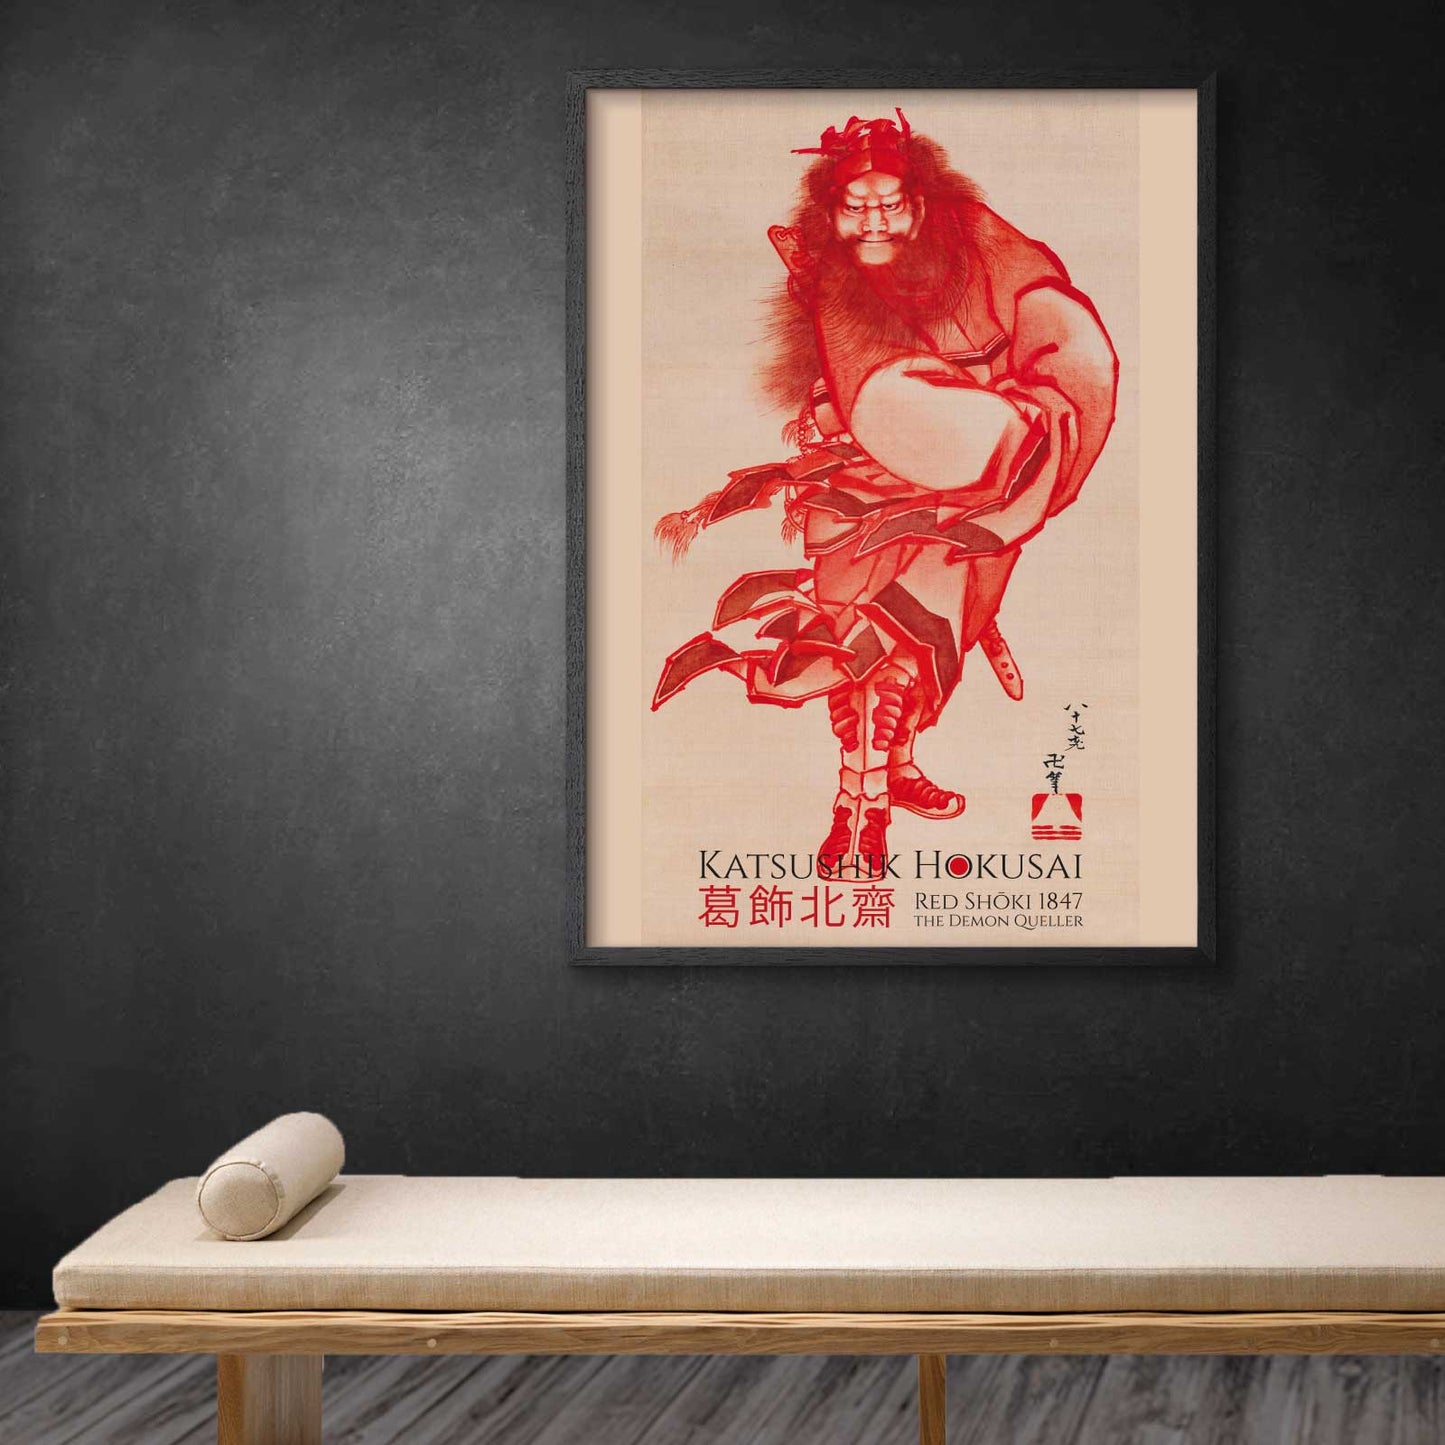 Art poster with Katsushika Horukai "Red Shōki"